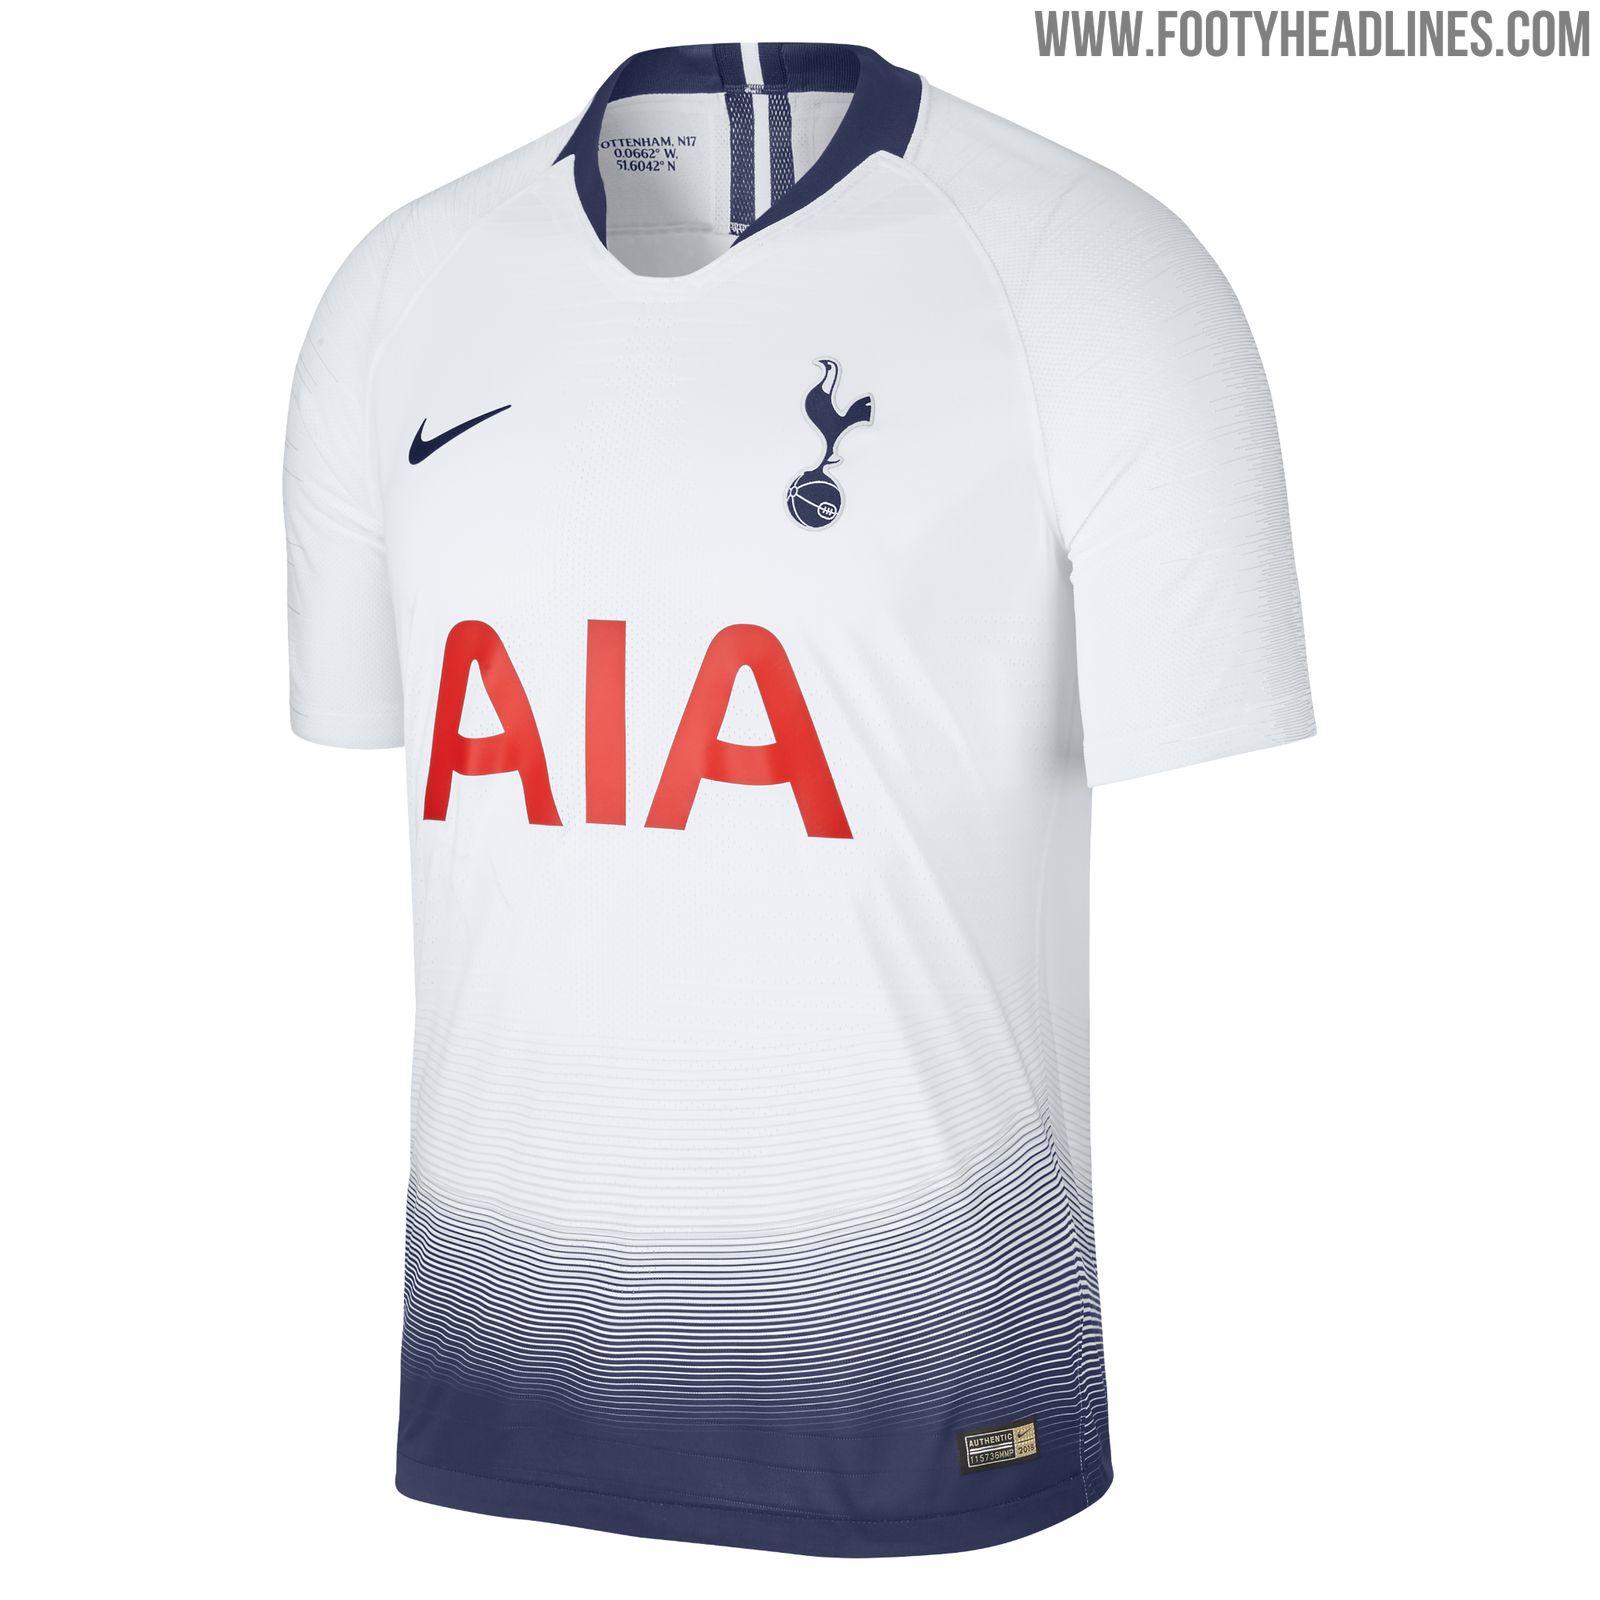 Nike Tottenham Hotspur 18-19 Home & Away Kits Released + Third Kit